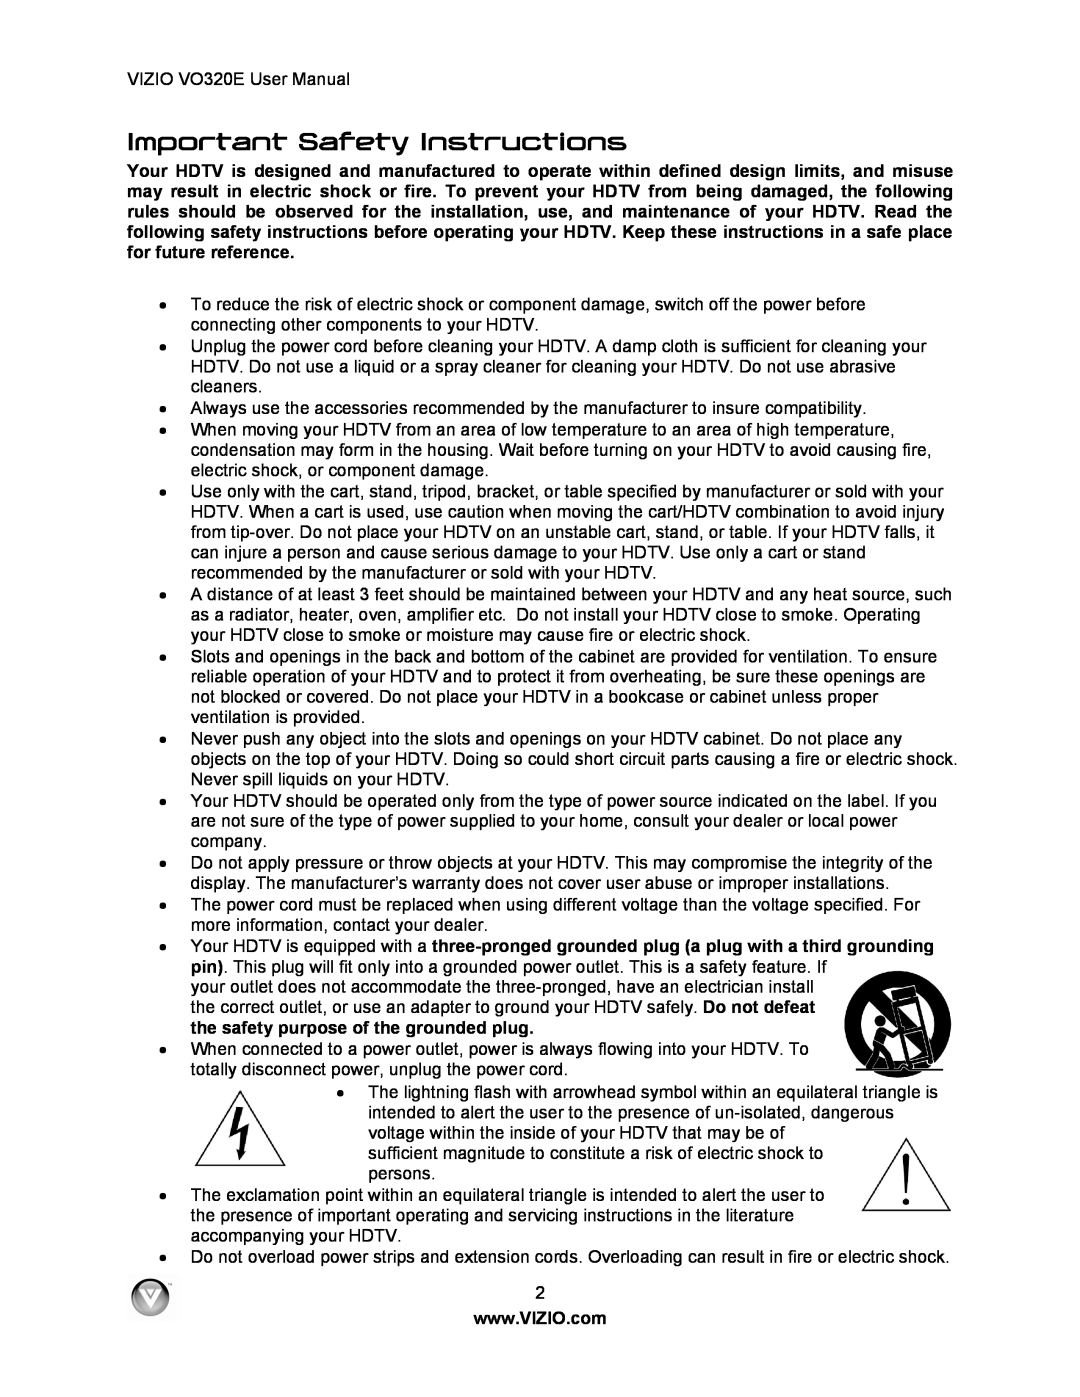 Vizio VO320E user manual Important Safety Instructions 